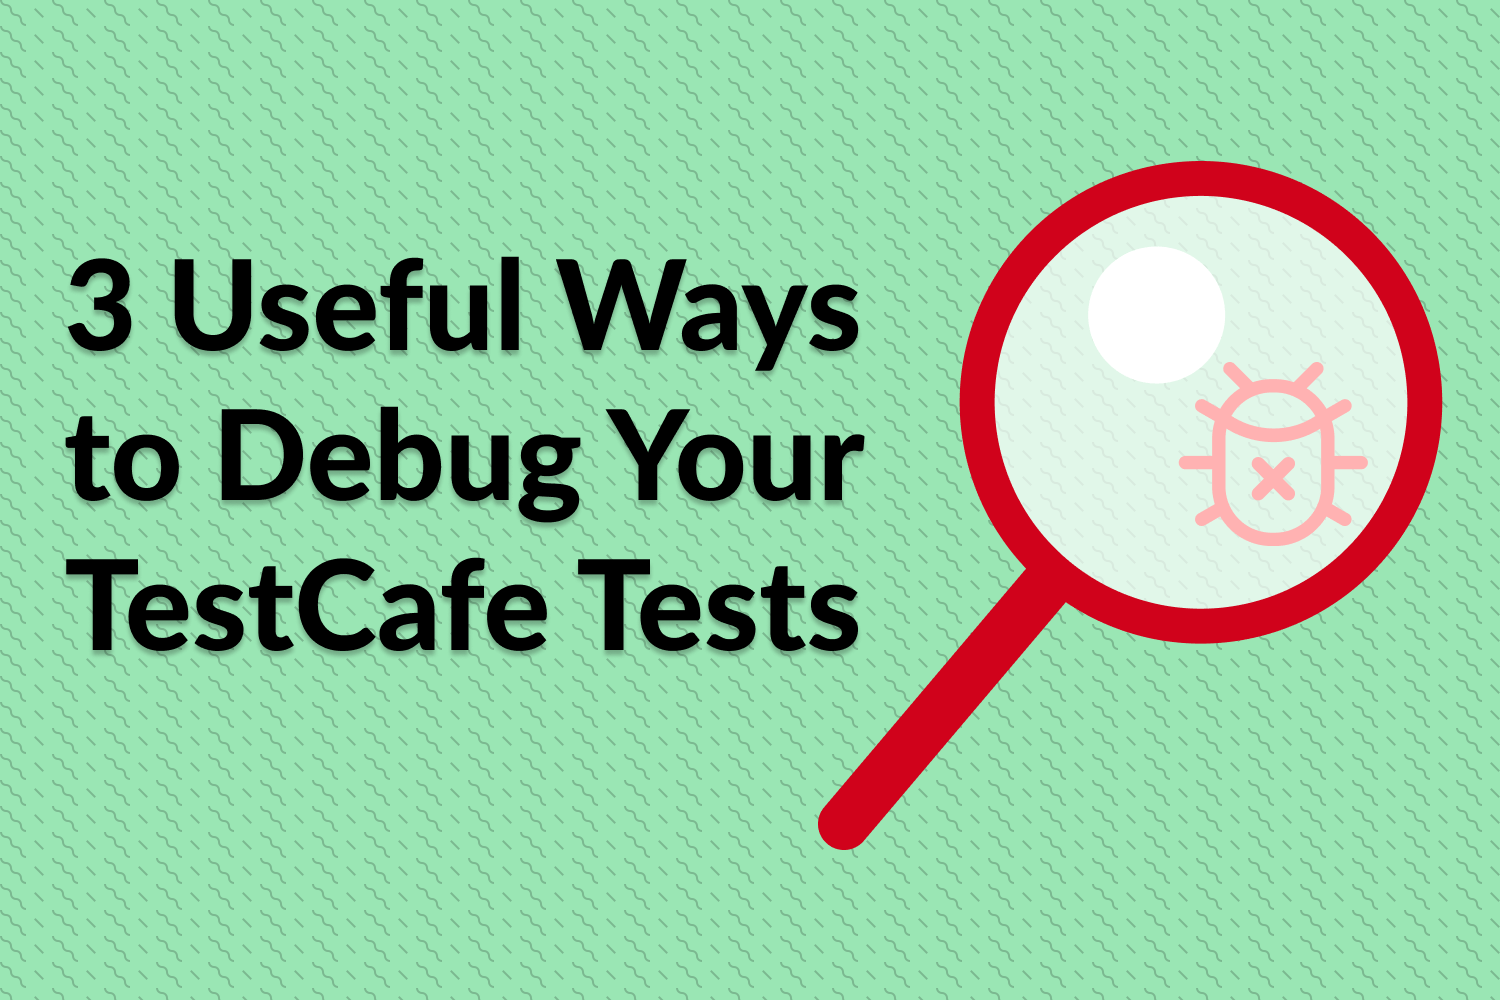 3 Useful Ways to Debug Your TestCafe Tests